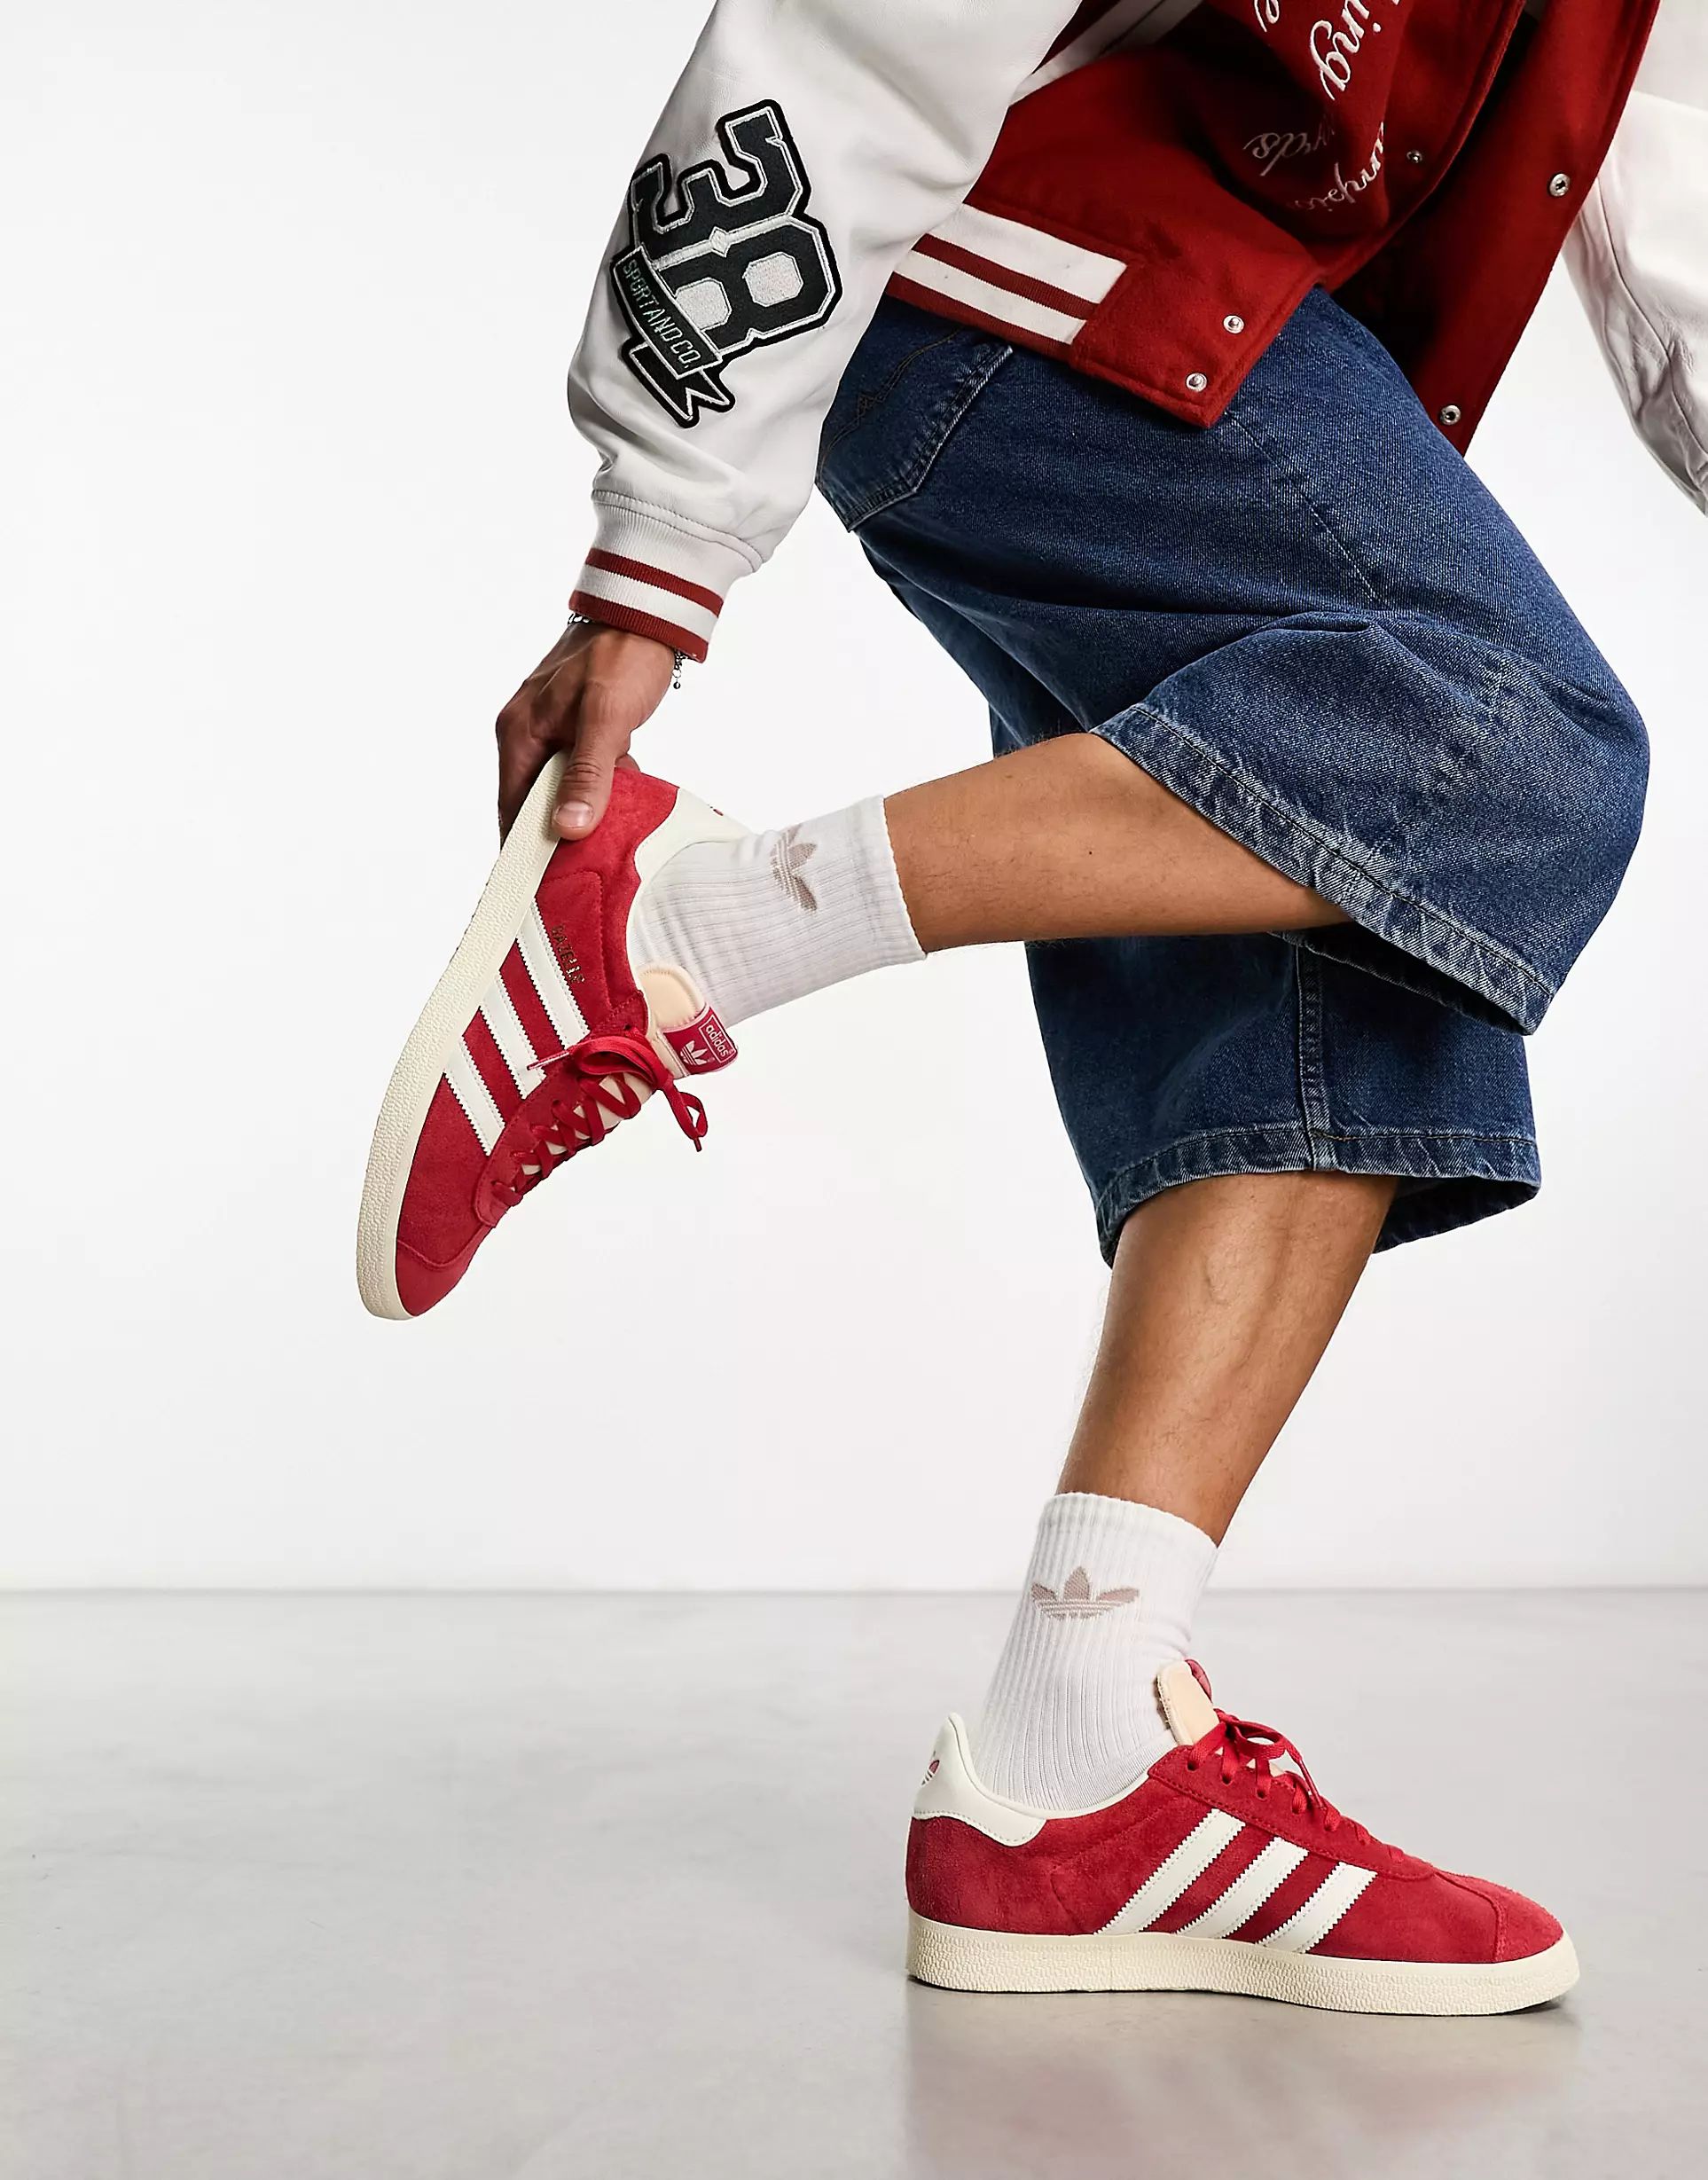 adidas Originals - Gazelle - Sneakers mirtillo rosso/bianco | ASOS (Global)